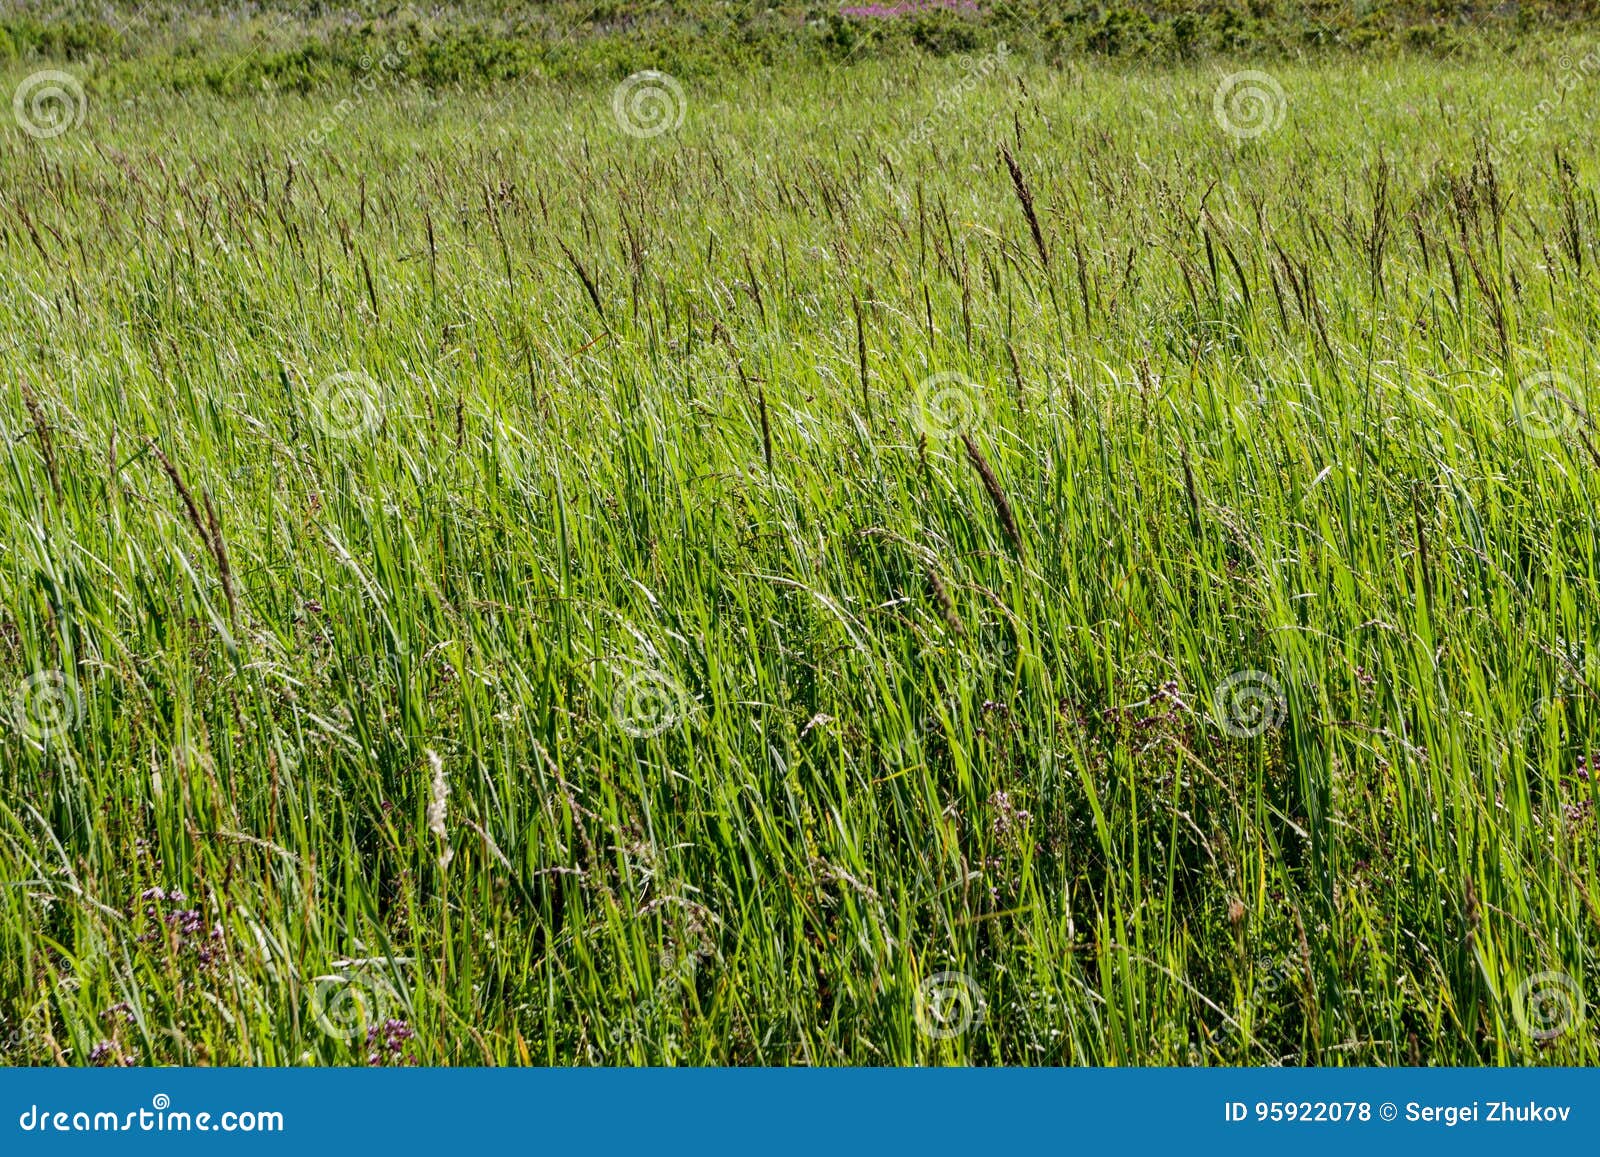 mountain herbage. wild grass